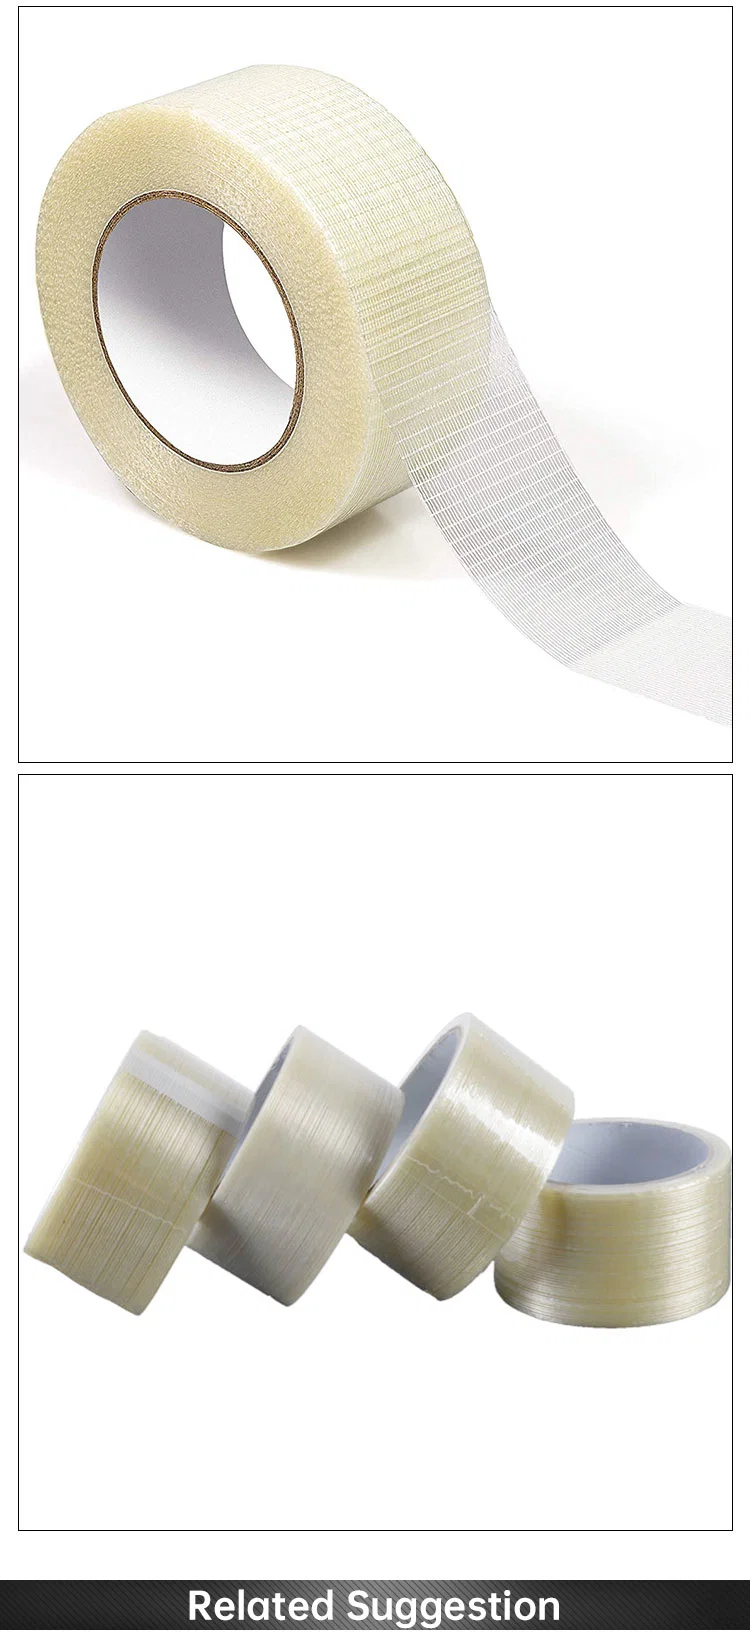 8915 OPP Seal Fiberglass Weave Cross Fiber Cross-Weaved Filament Tape